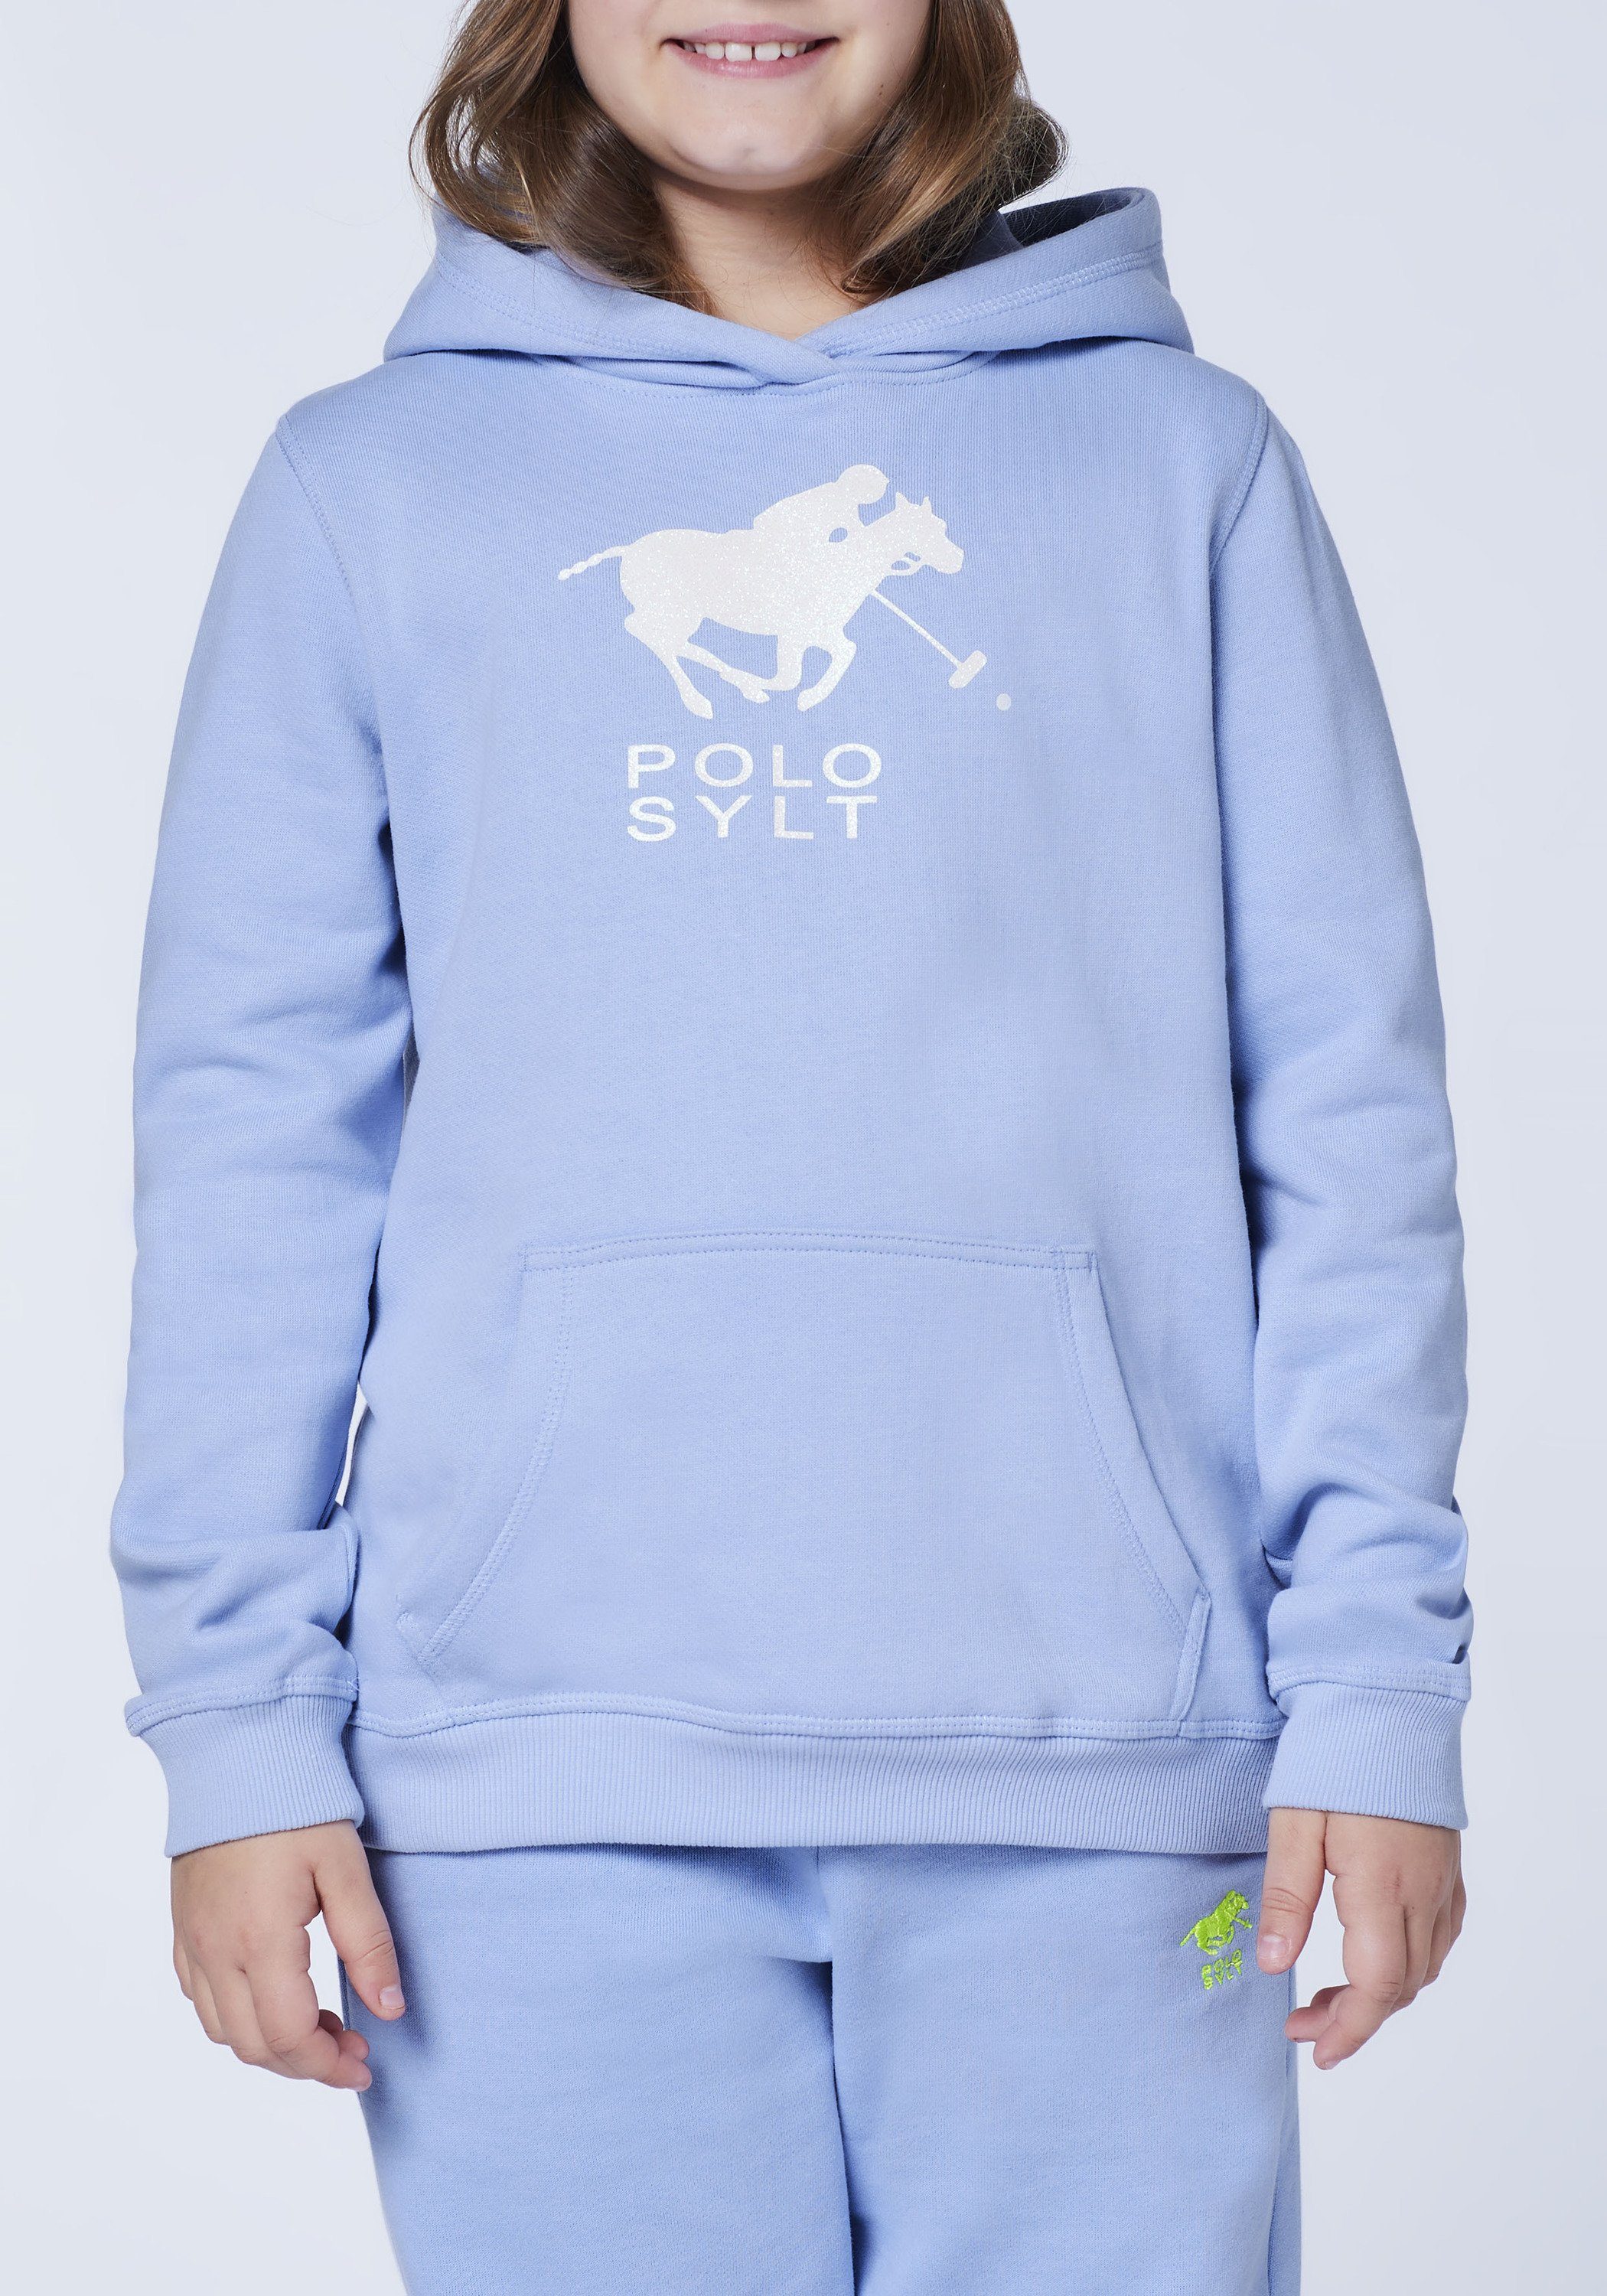 Polo Sylt Sweatshirt mit glitzerndem Blue Label-Motiv Brunnera